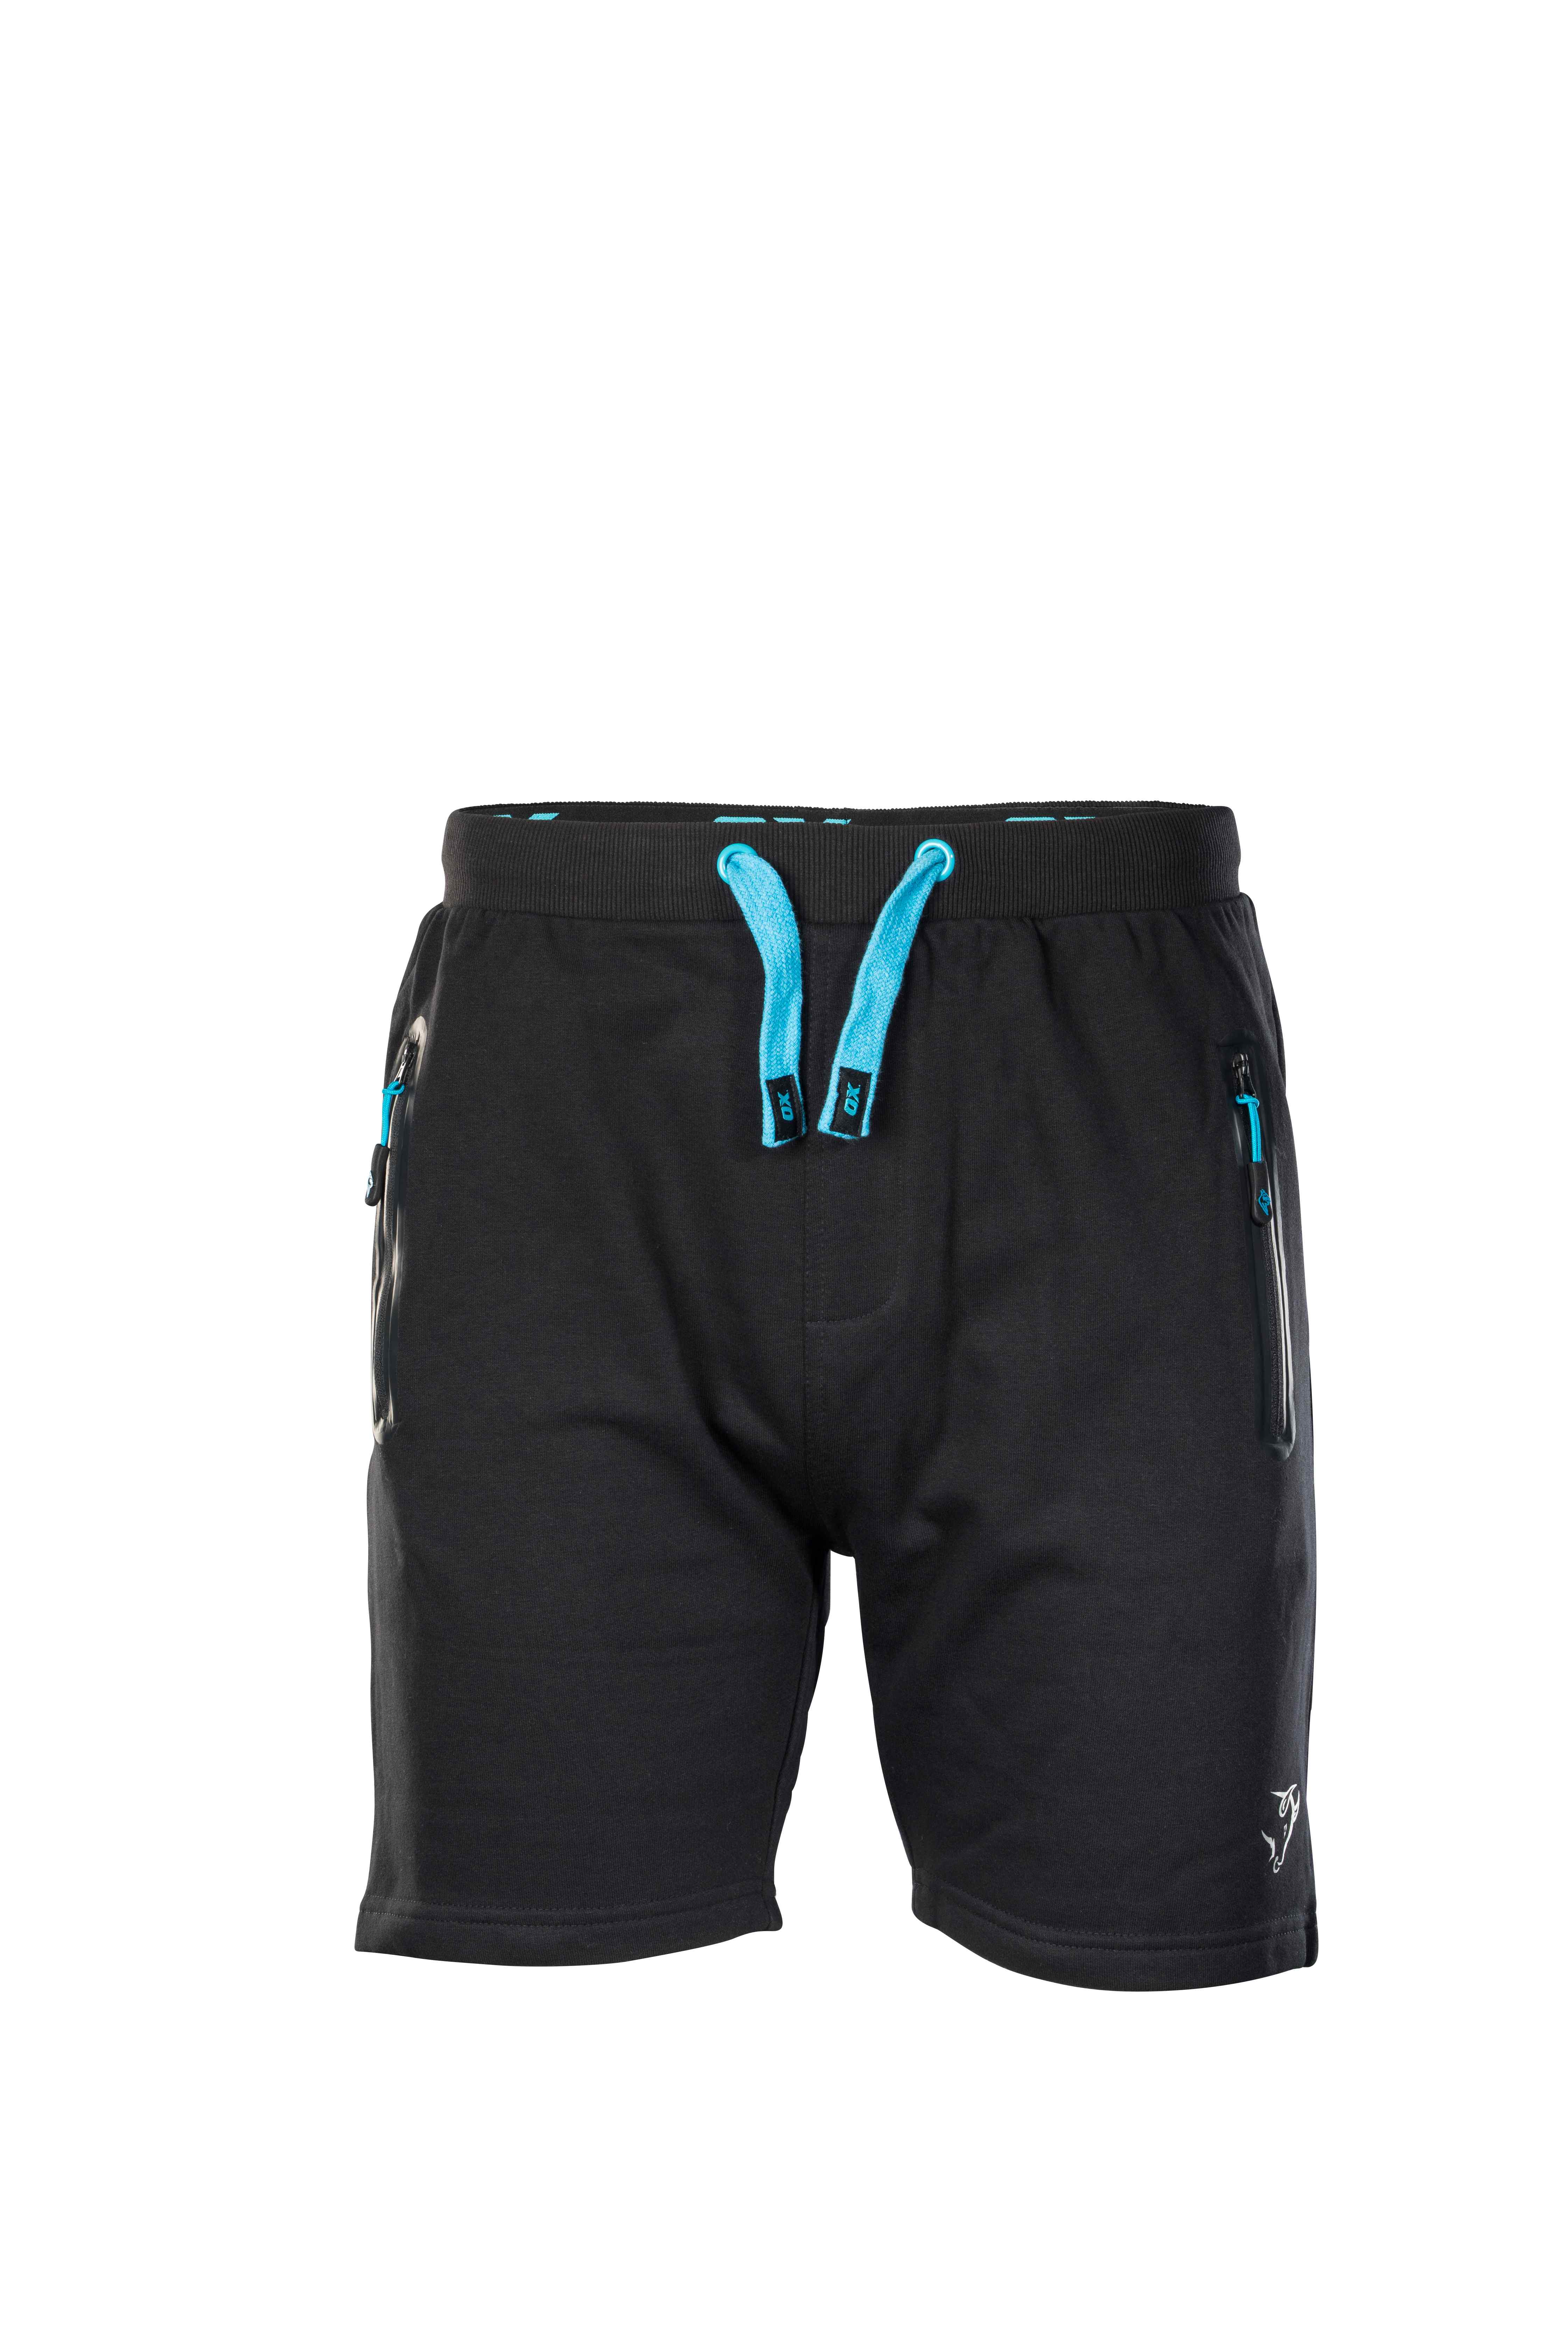 OX Jogger Shorts - Black - 40